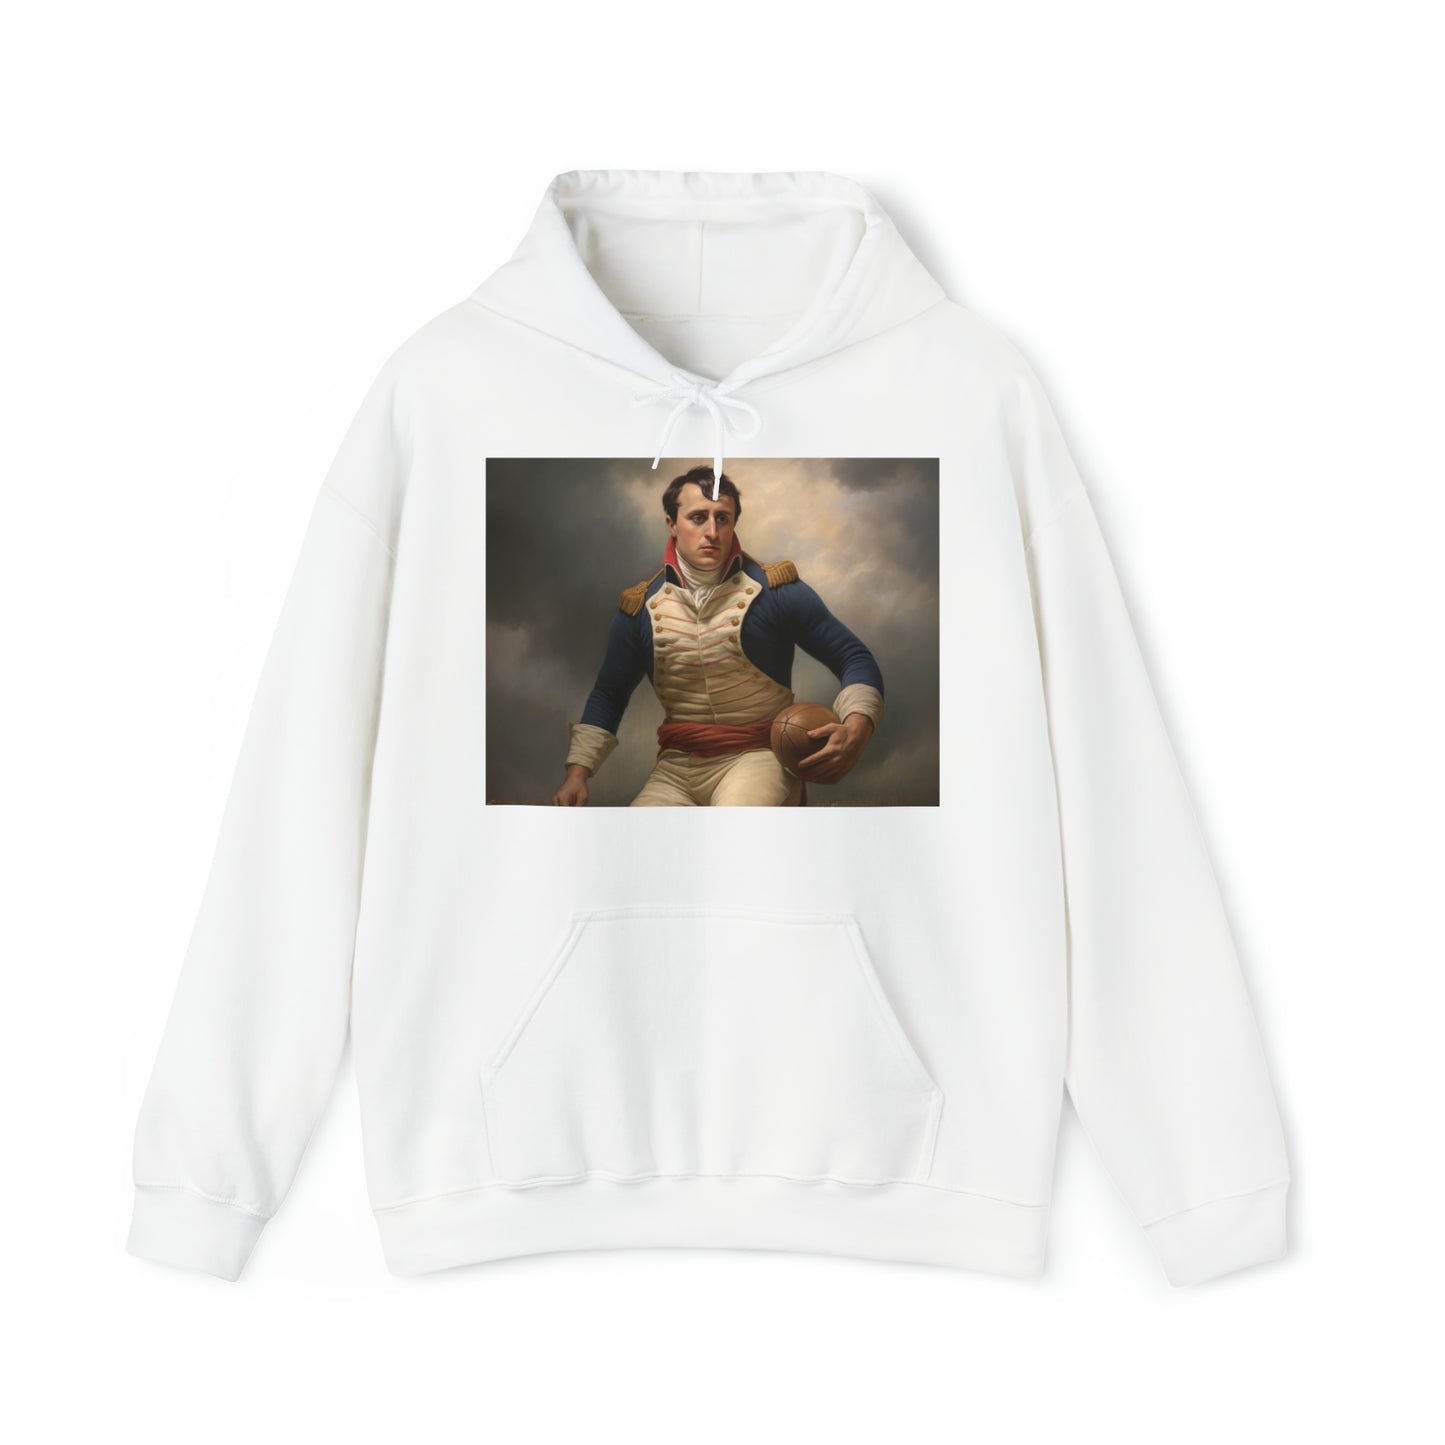 Napoleon Rugby - light hoodies